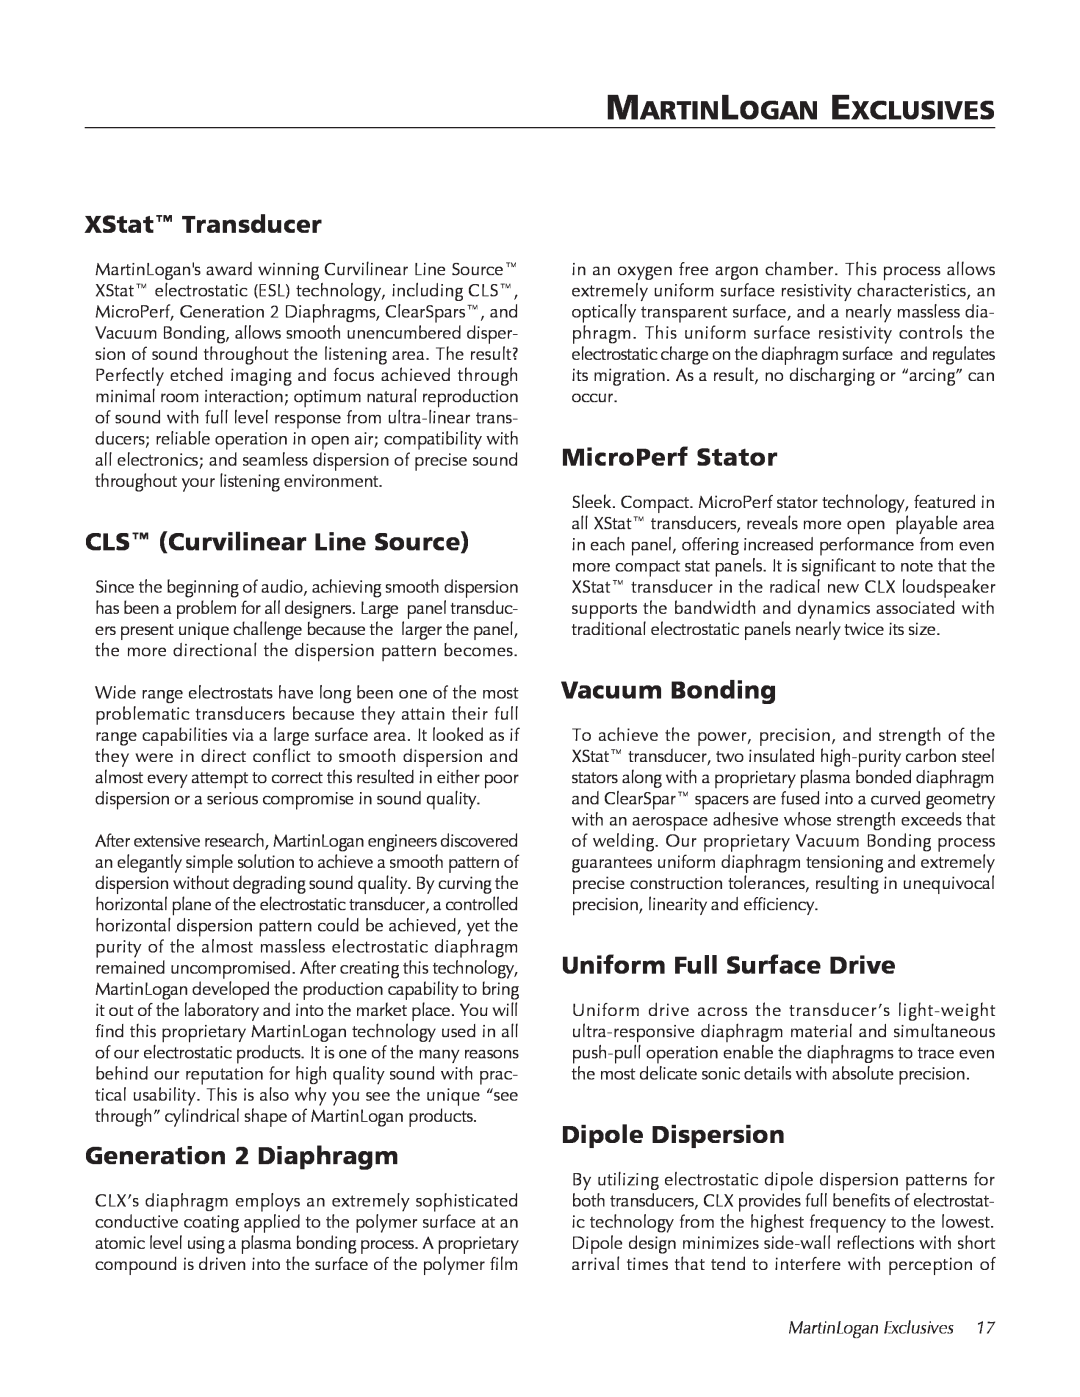 MartinLogan CLX user manual MartinLogan Exclusives, XStat Transducer, CLS Curvilinear Line Source, Generation 2 Diaphragm 